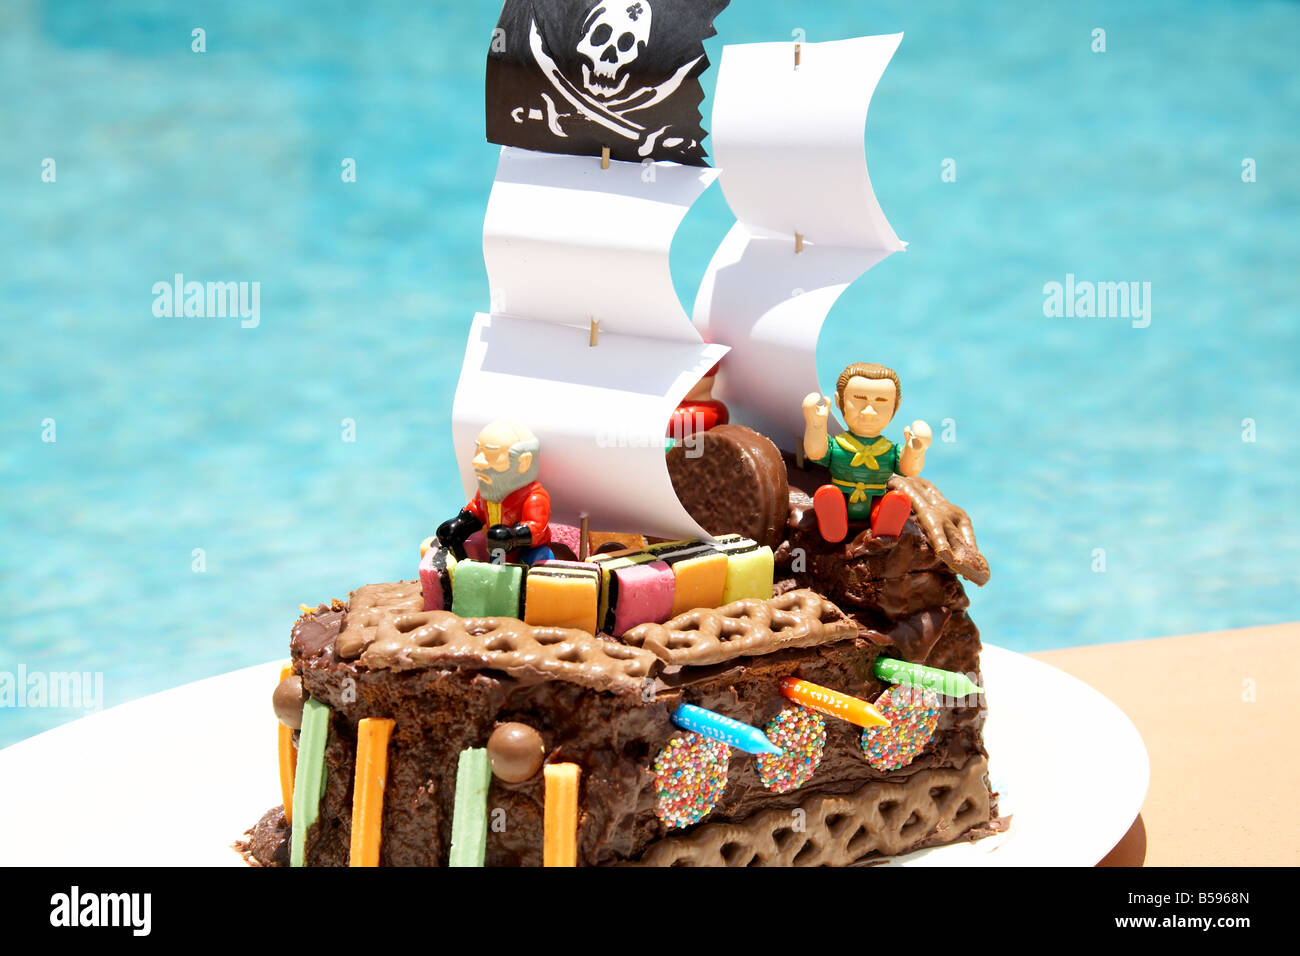 Lego Pirate Cake |